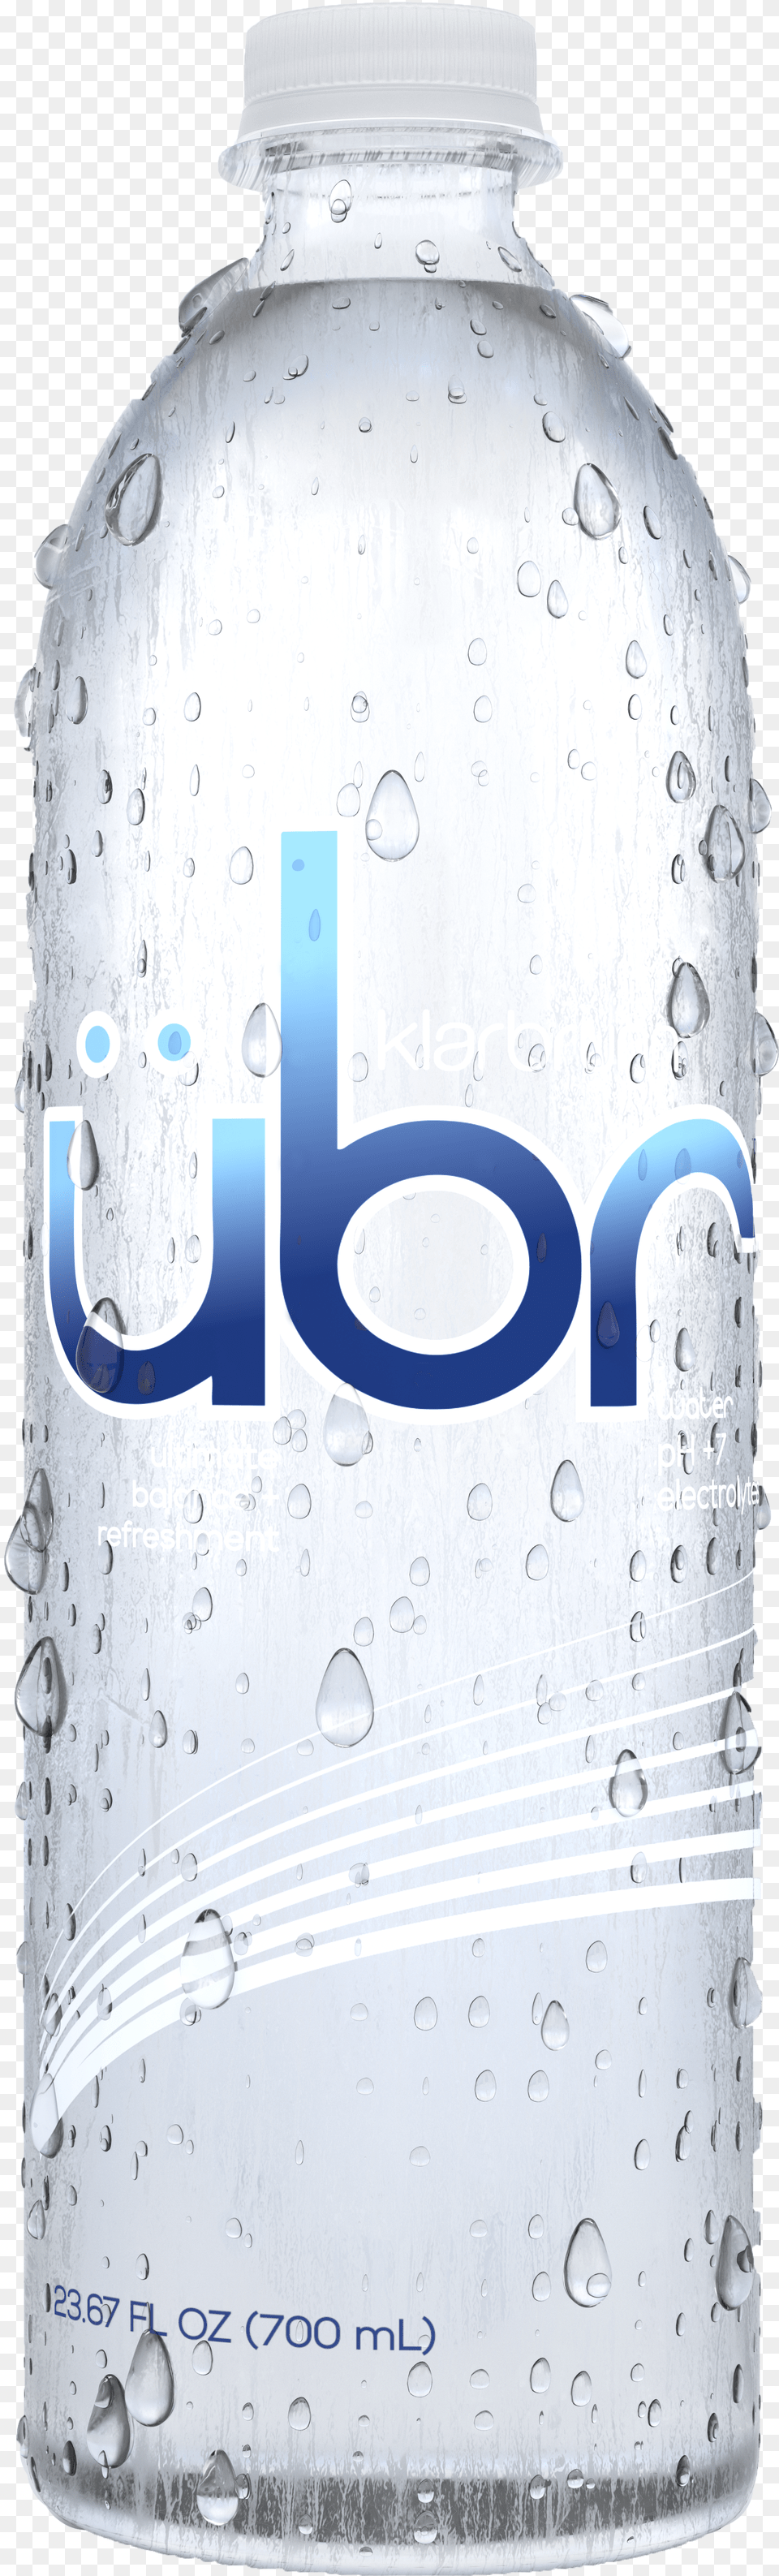 Ubr Purified Ph Enhanced Drinking Water Ubr Water Free Transparent Png